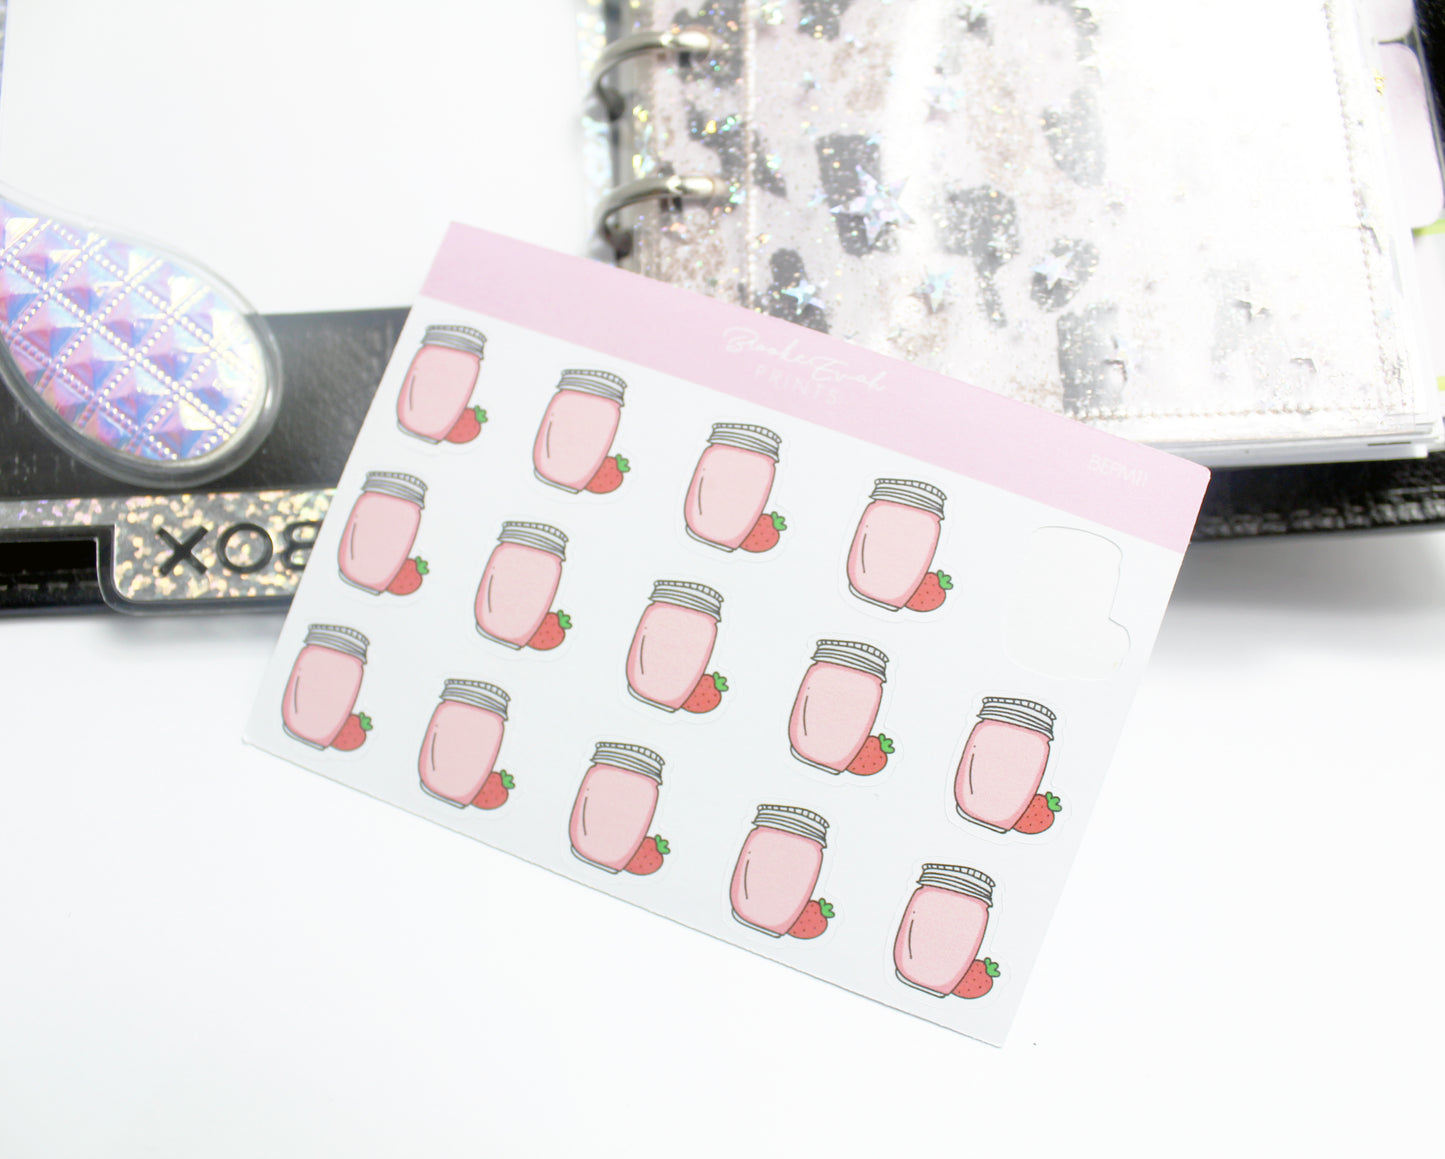 Mini Strawberry Smoothie Stickers - BEPM11 - BrookeEvahPrints 